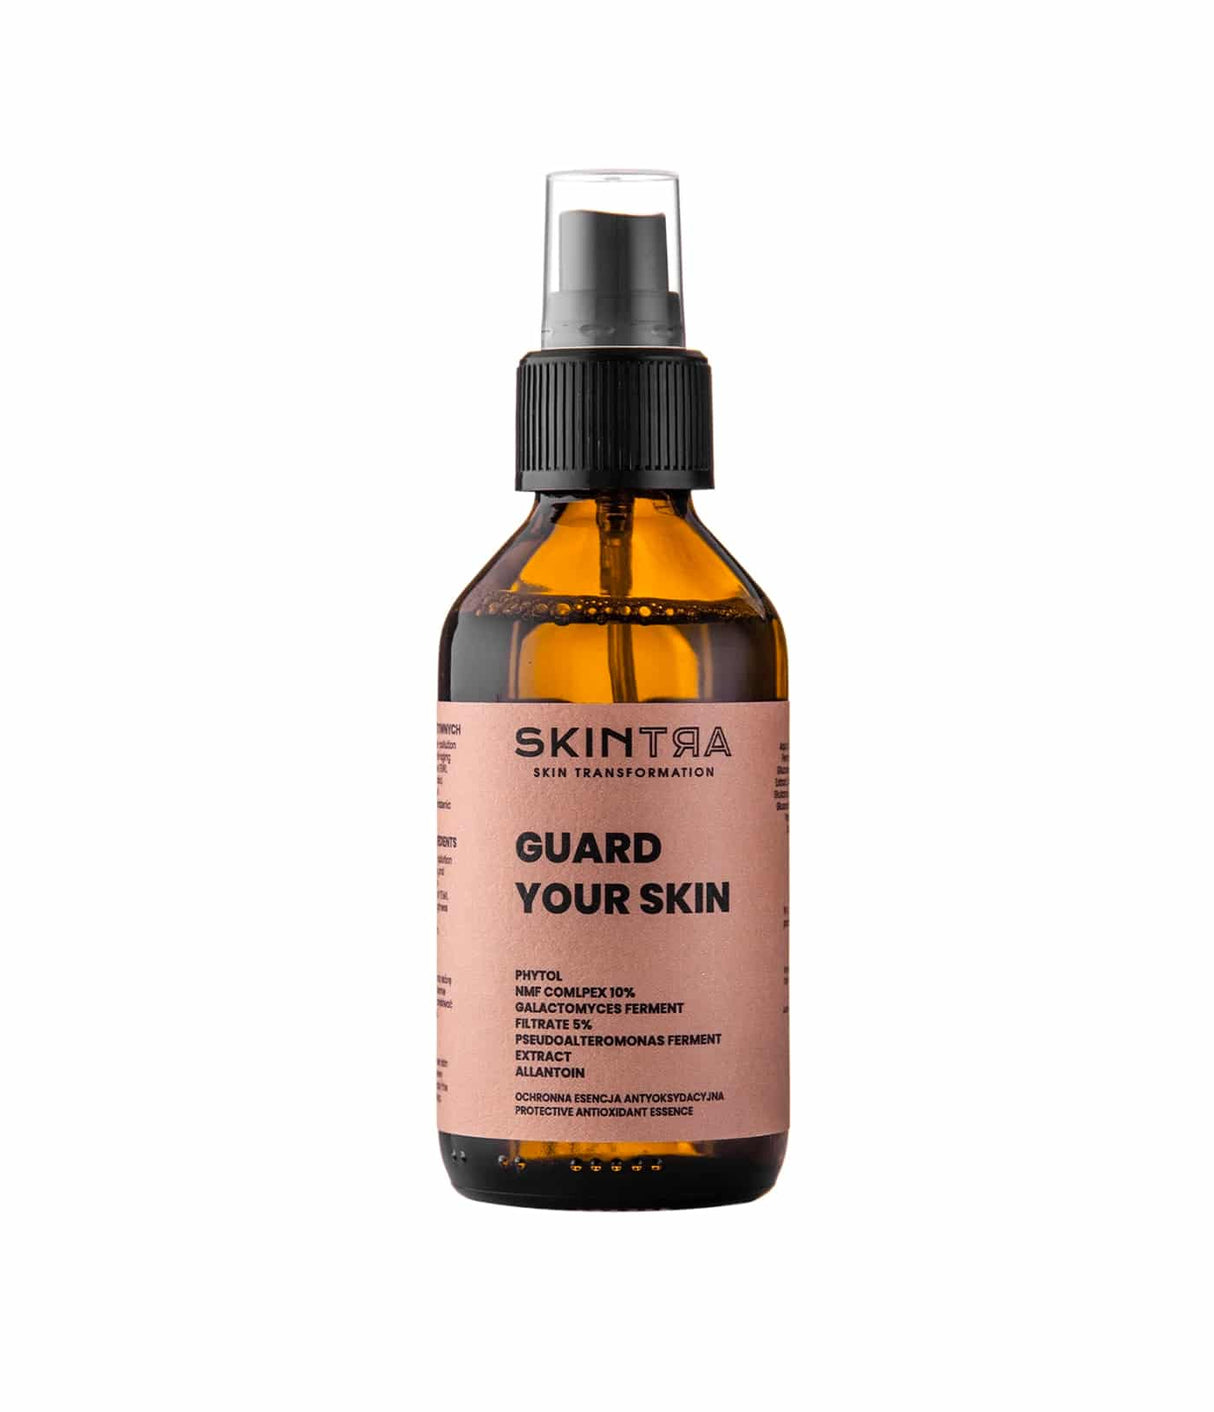 Guard Your Skin - Protective Antioxidant Essence de SkinTra